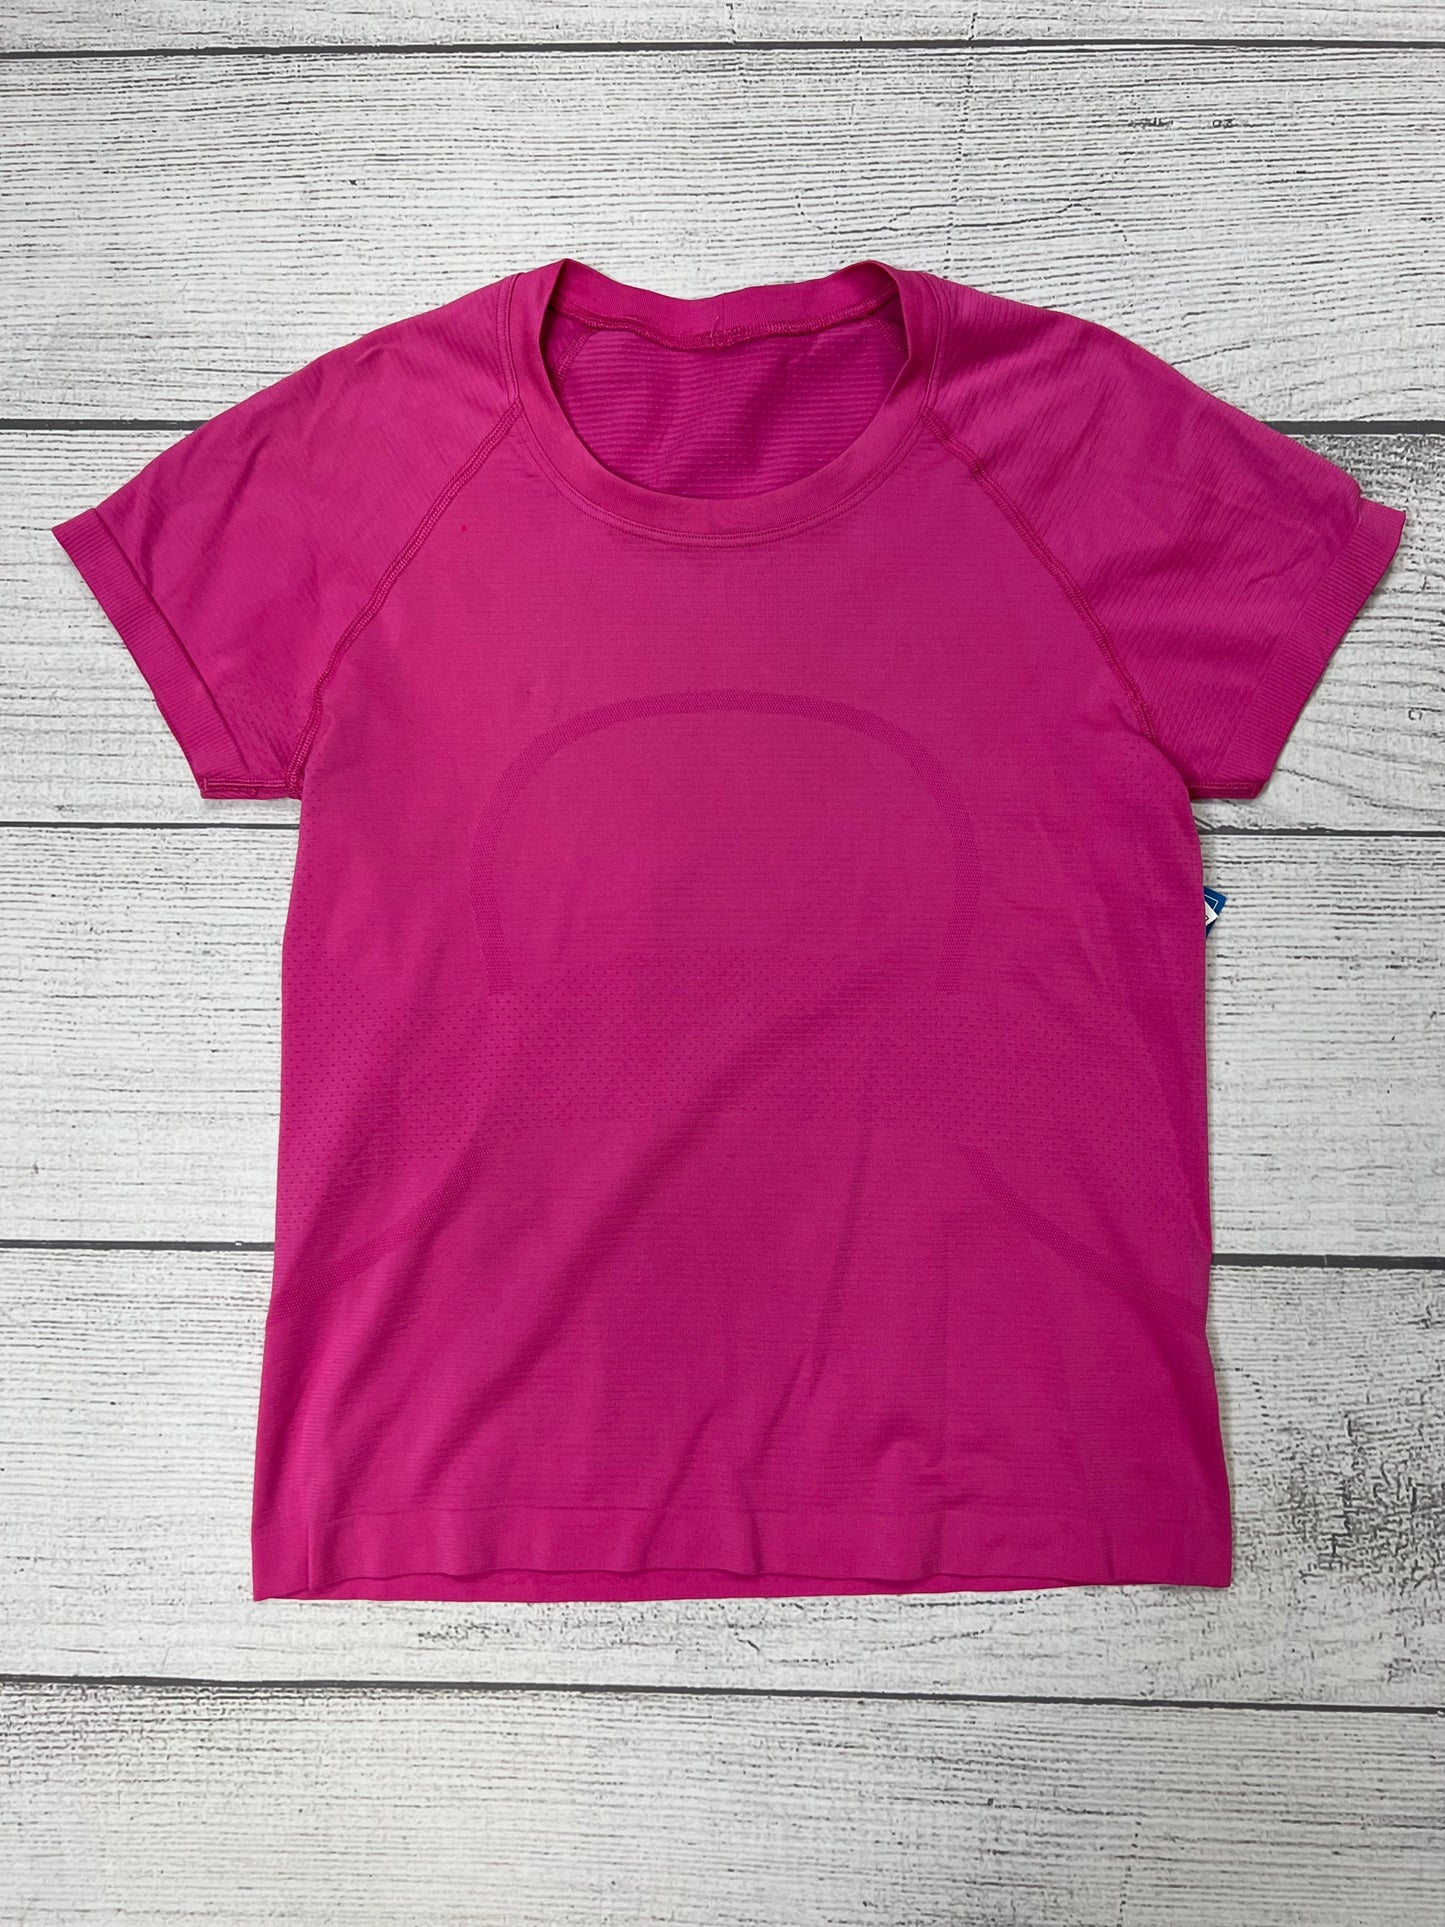 Pink Athletic Top Short Sleeve Lululemon, Size S